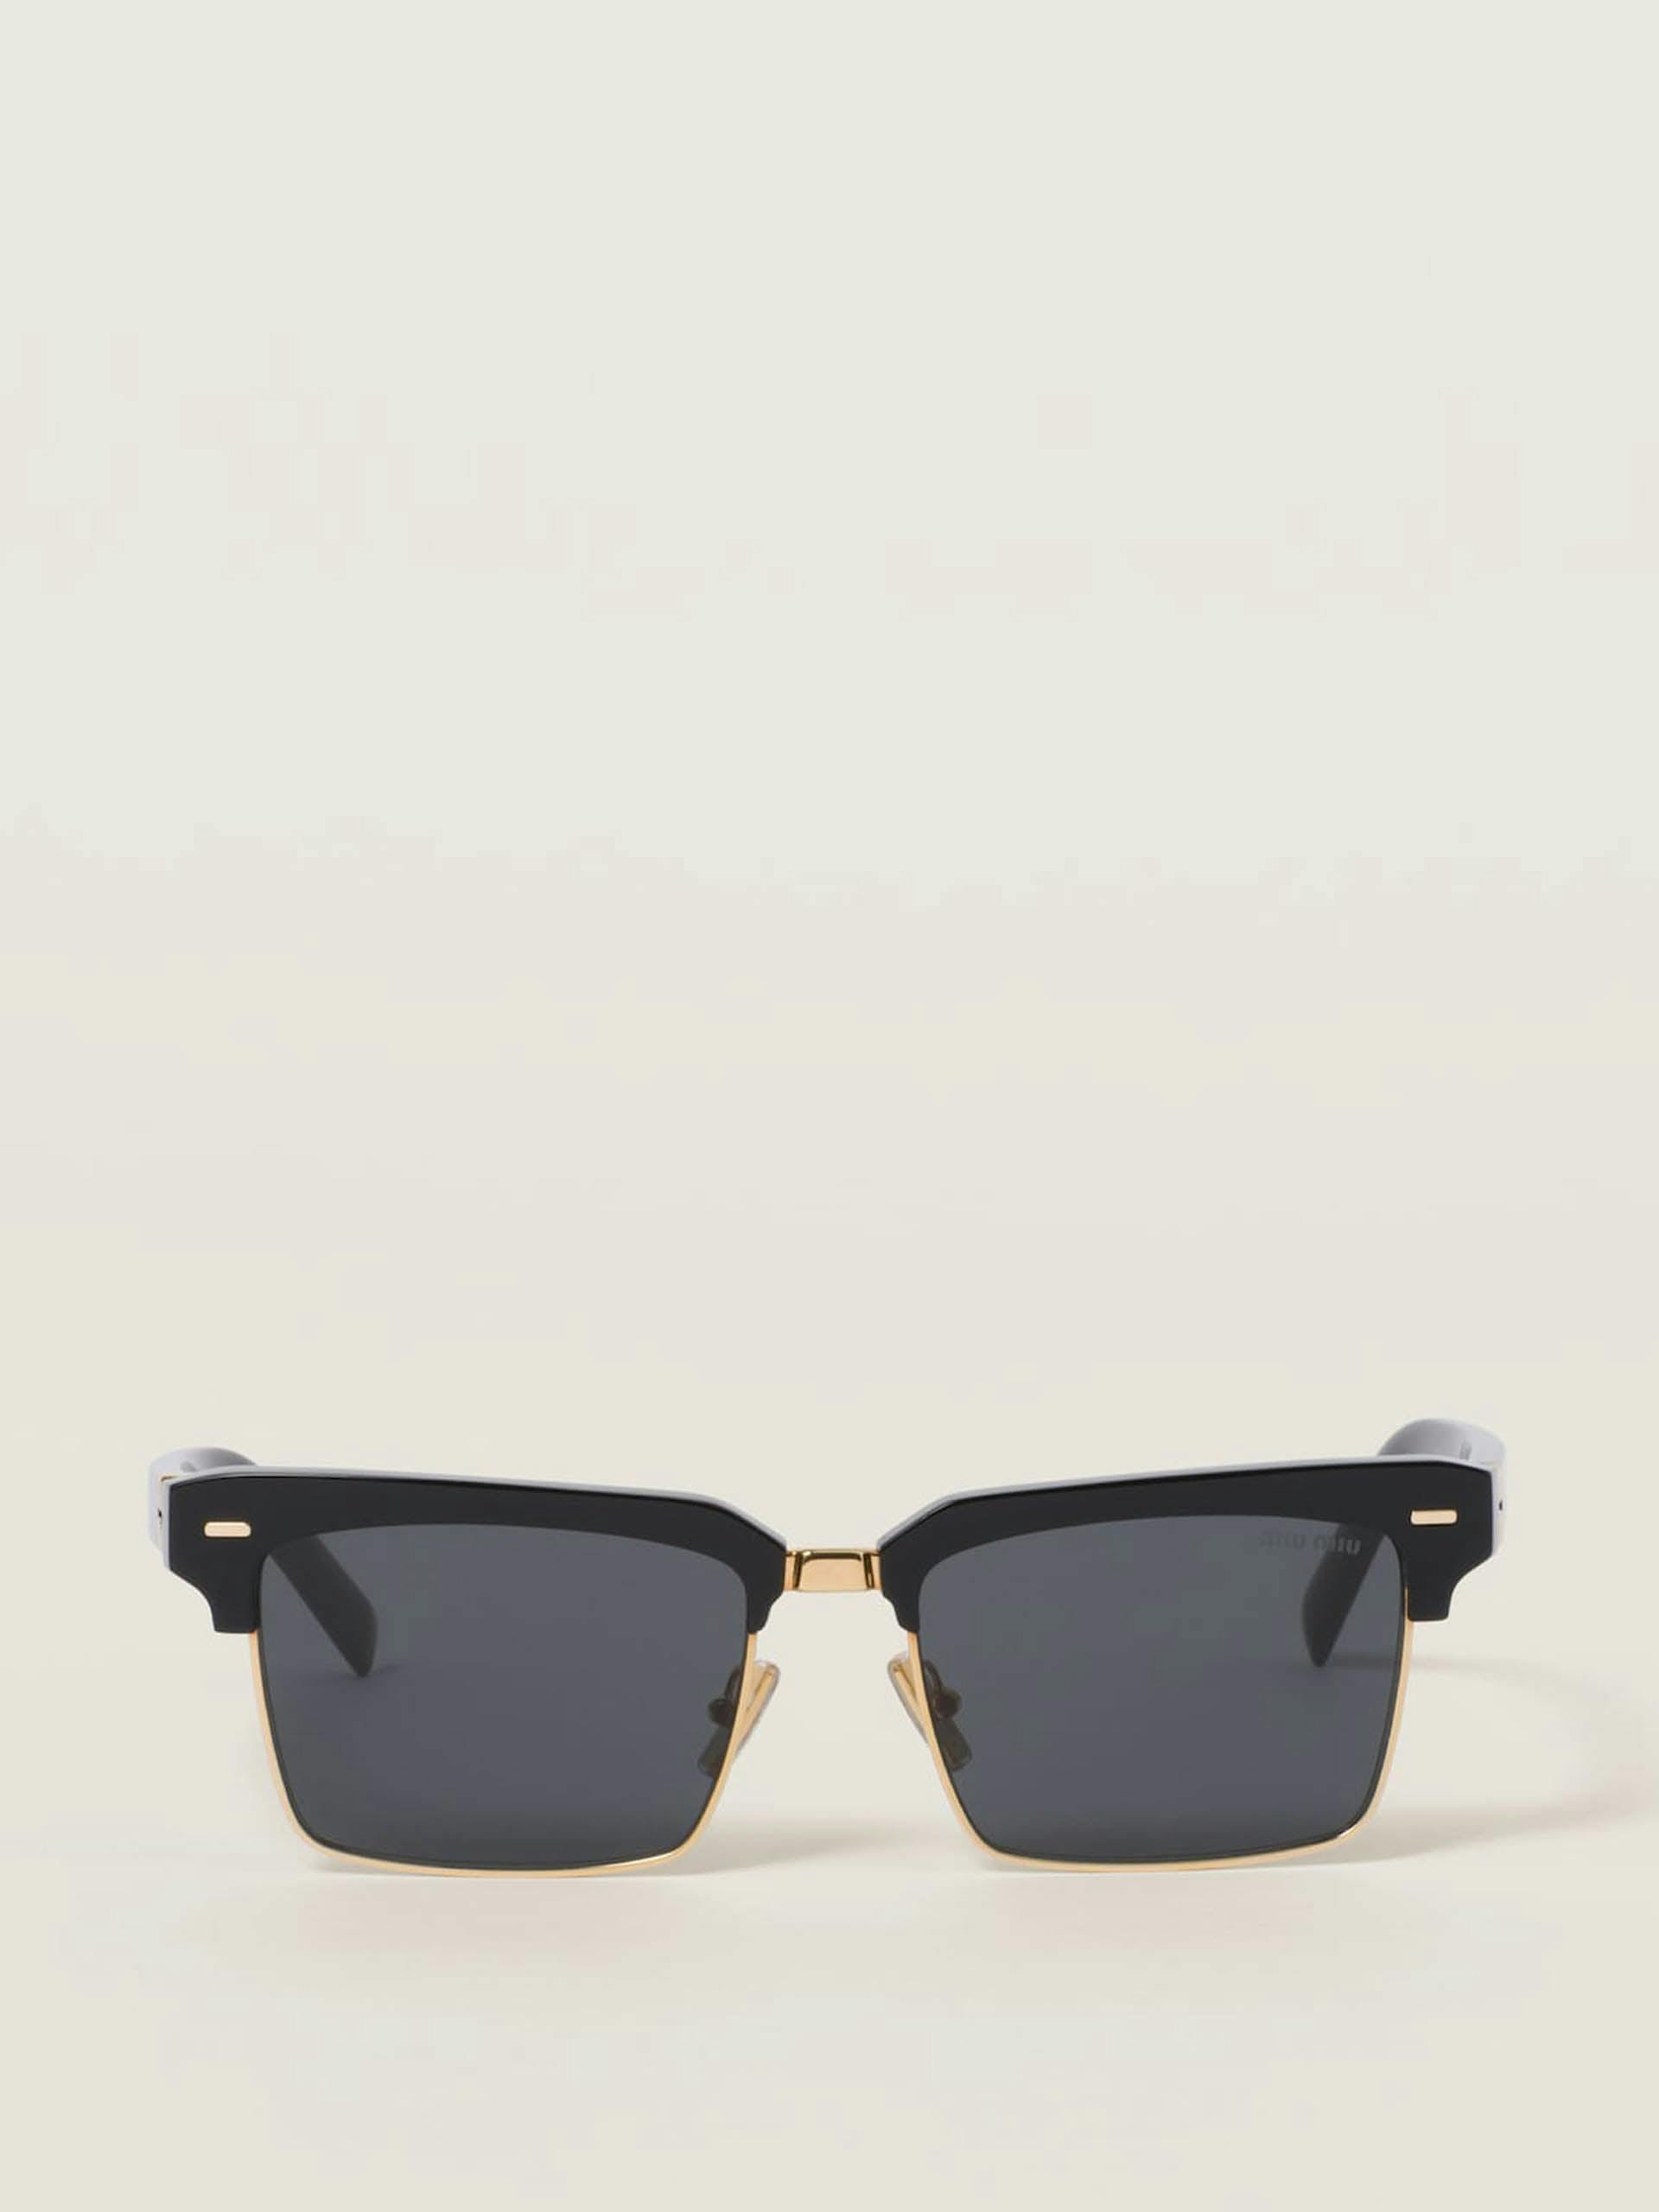 Runway sunglasses